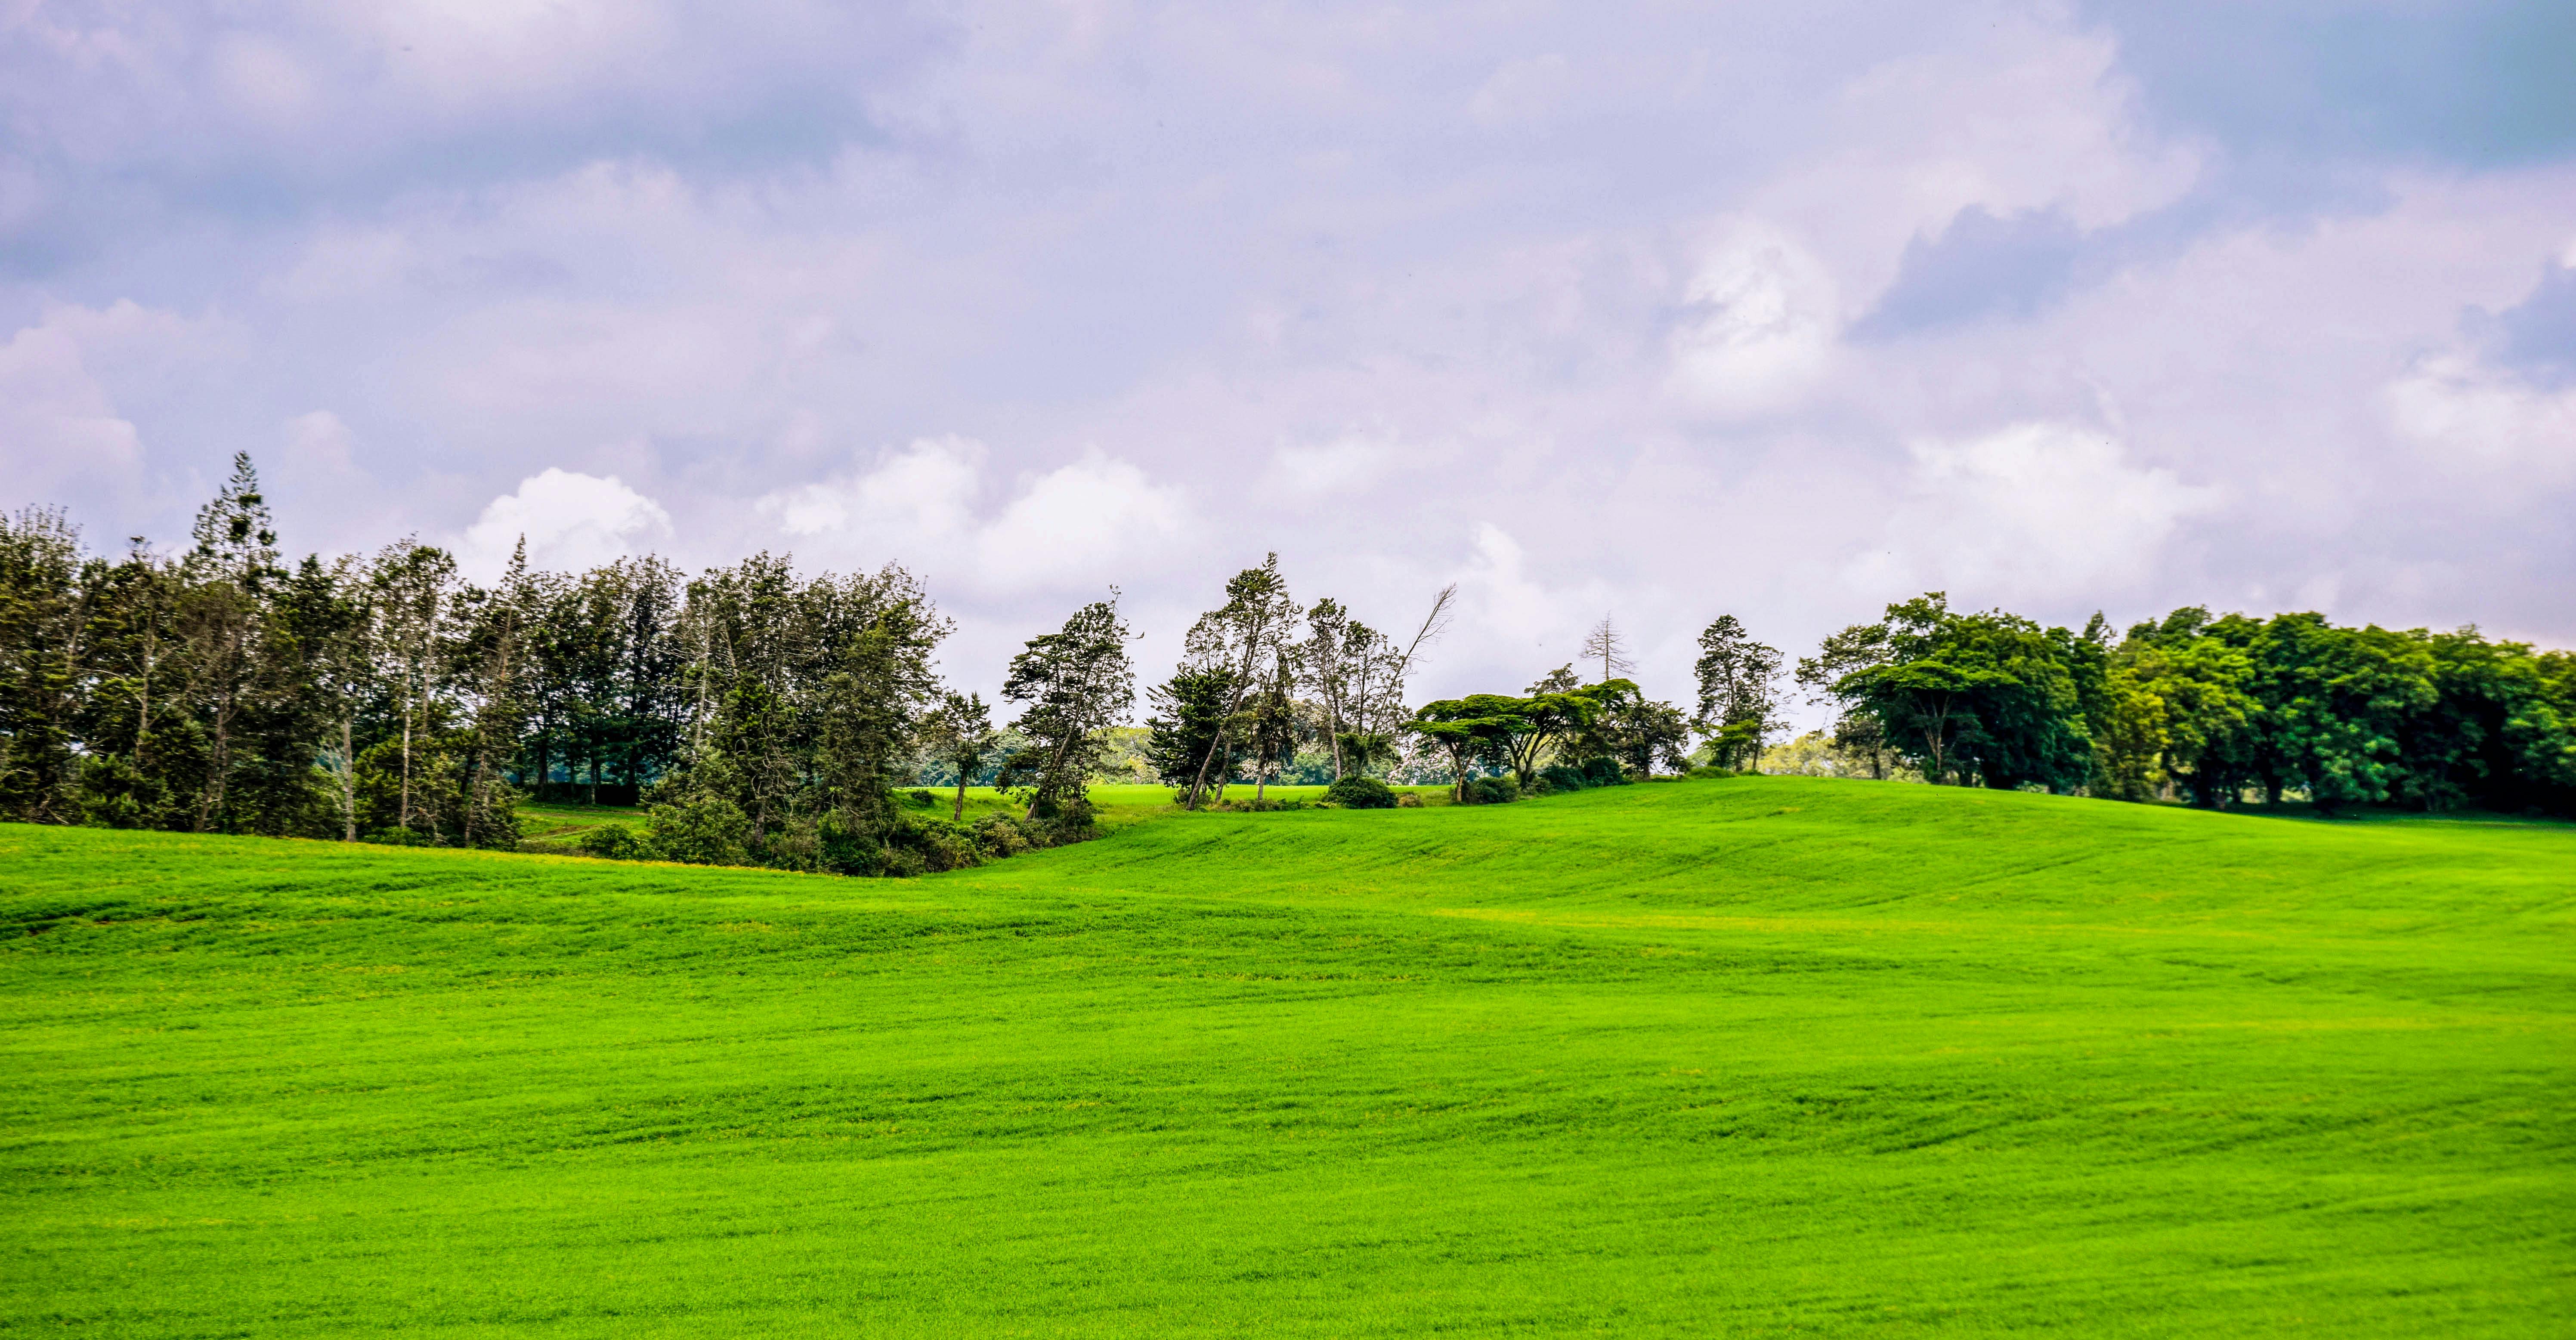 Free stock photo of green field, Rift valley highlands kenya